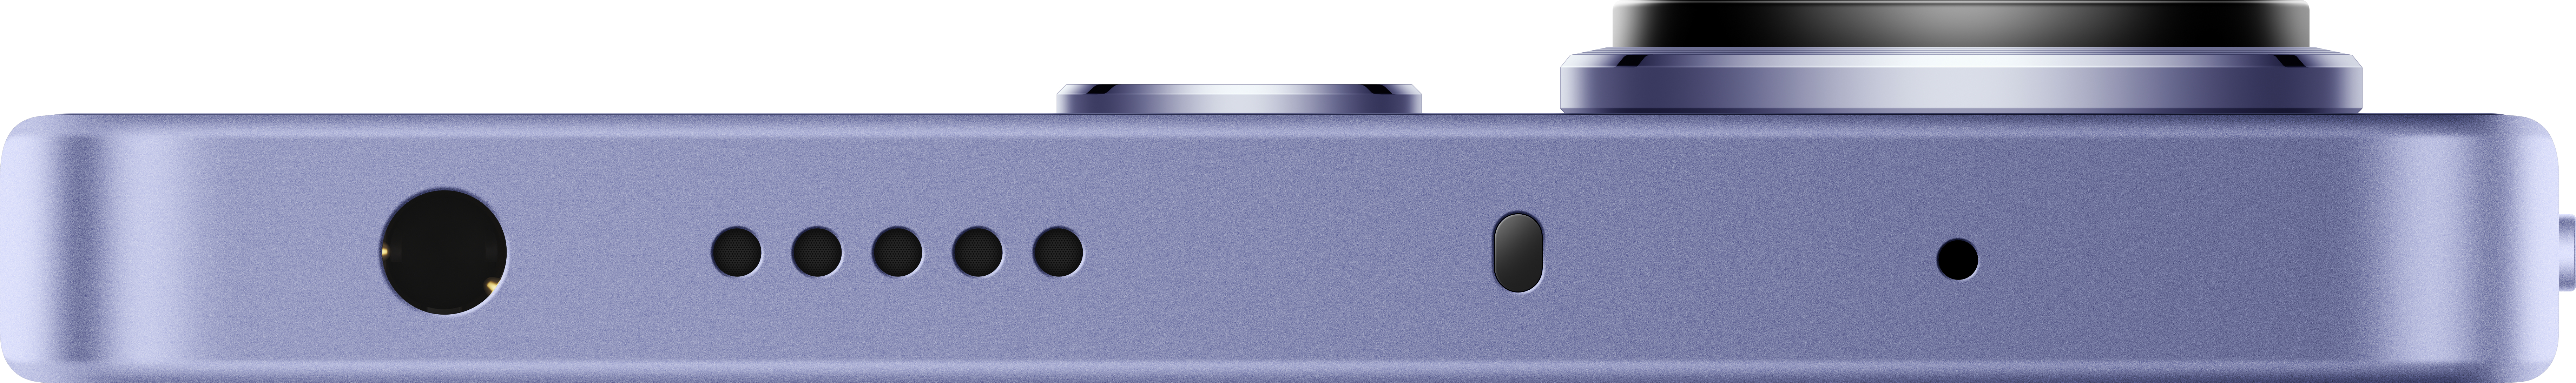 13 XIAOMI Redmi Purple GB Lavender Note Dual Pro SIM 256